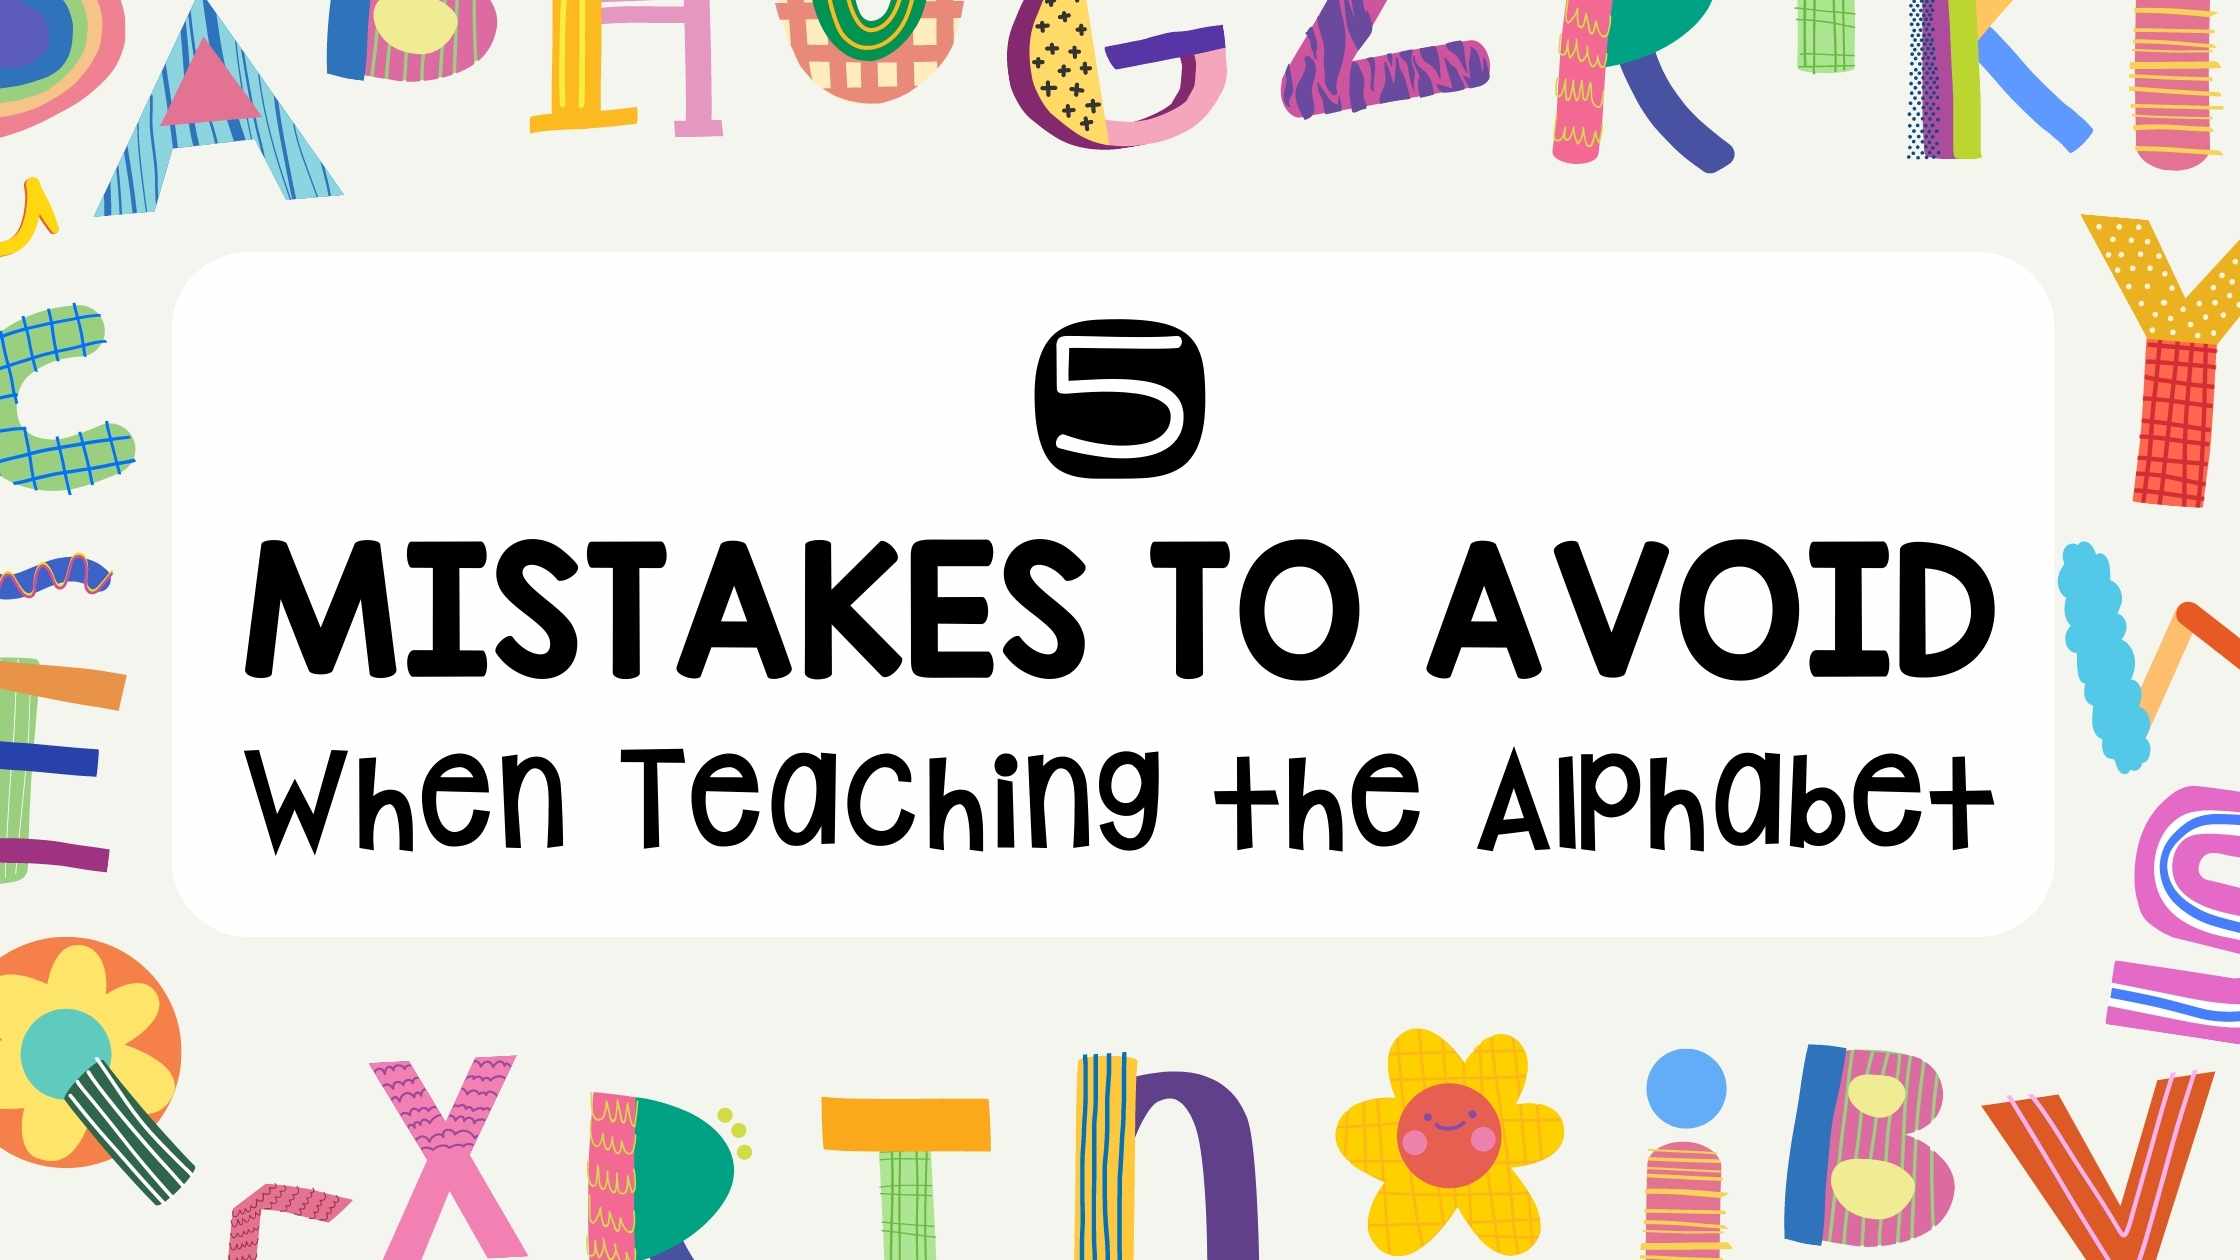 5 Mistakes to Avoid when Teaching the Alphabet